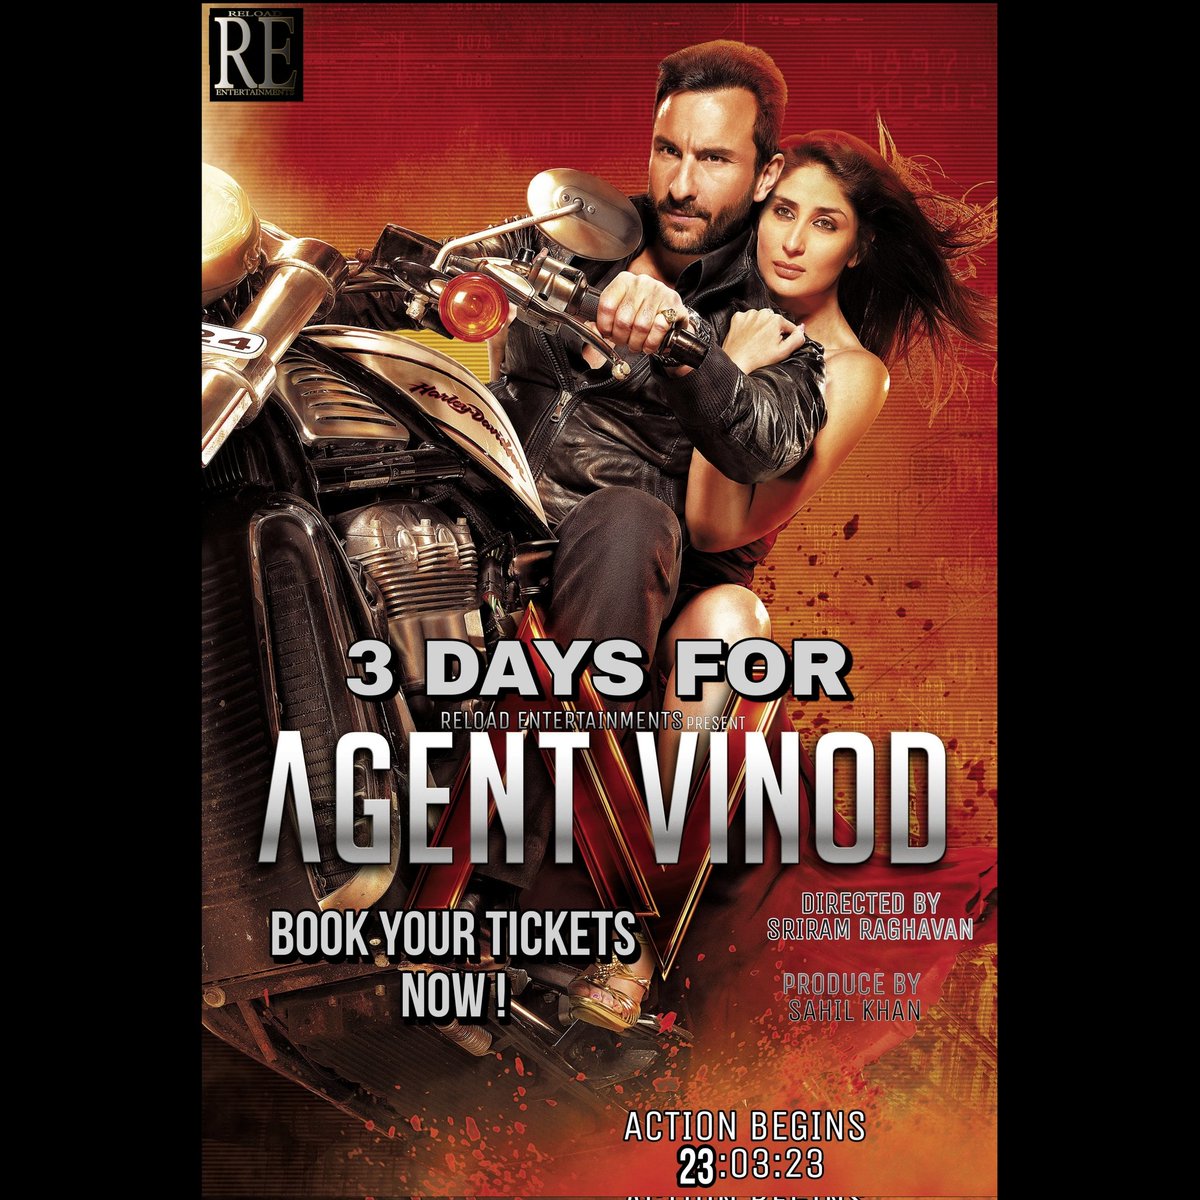 3 Days to go For #AgentVinod 🔥
.
.
.Celebrate #AgentVinod with #RE only on this 23rd of March 2023
in Cinemas near you.
.
.#SaifAliKhan @kareenakapoorkhan   
#SriramRaghavan